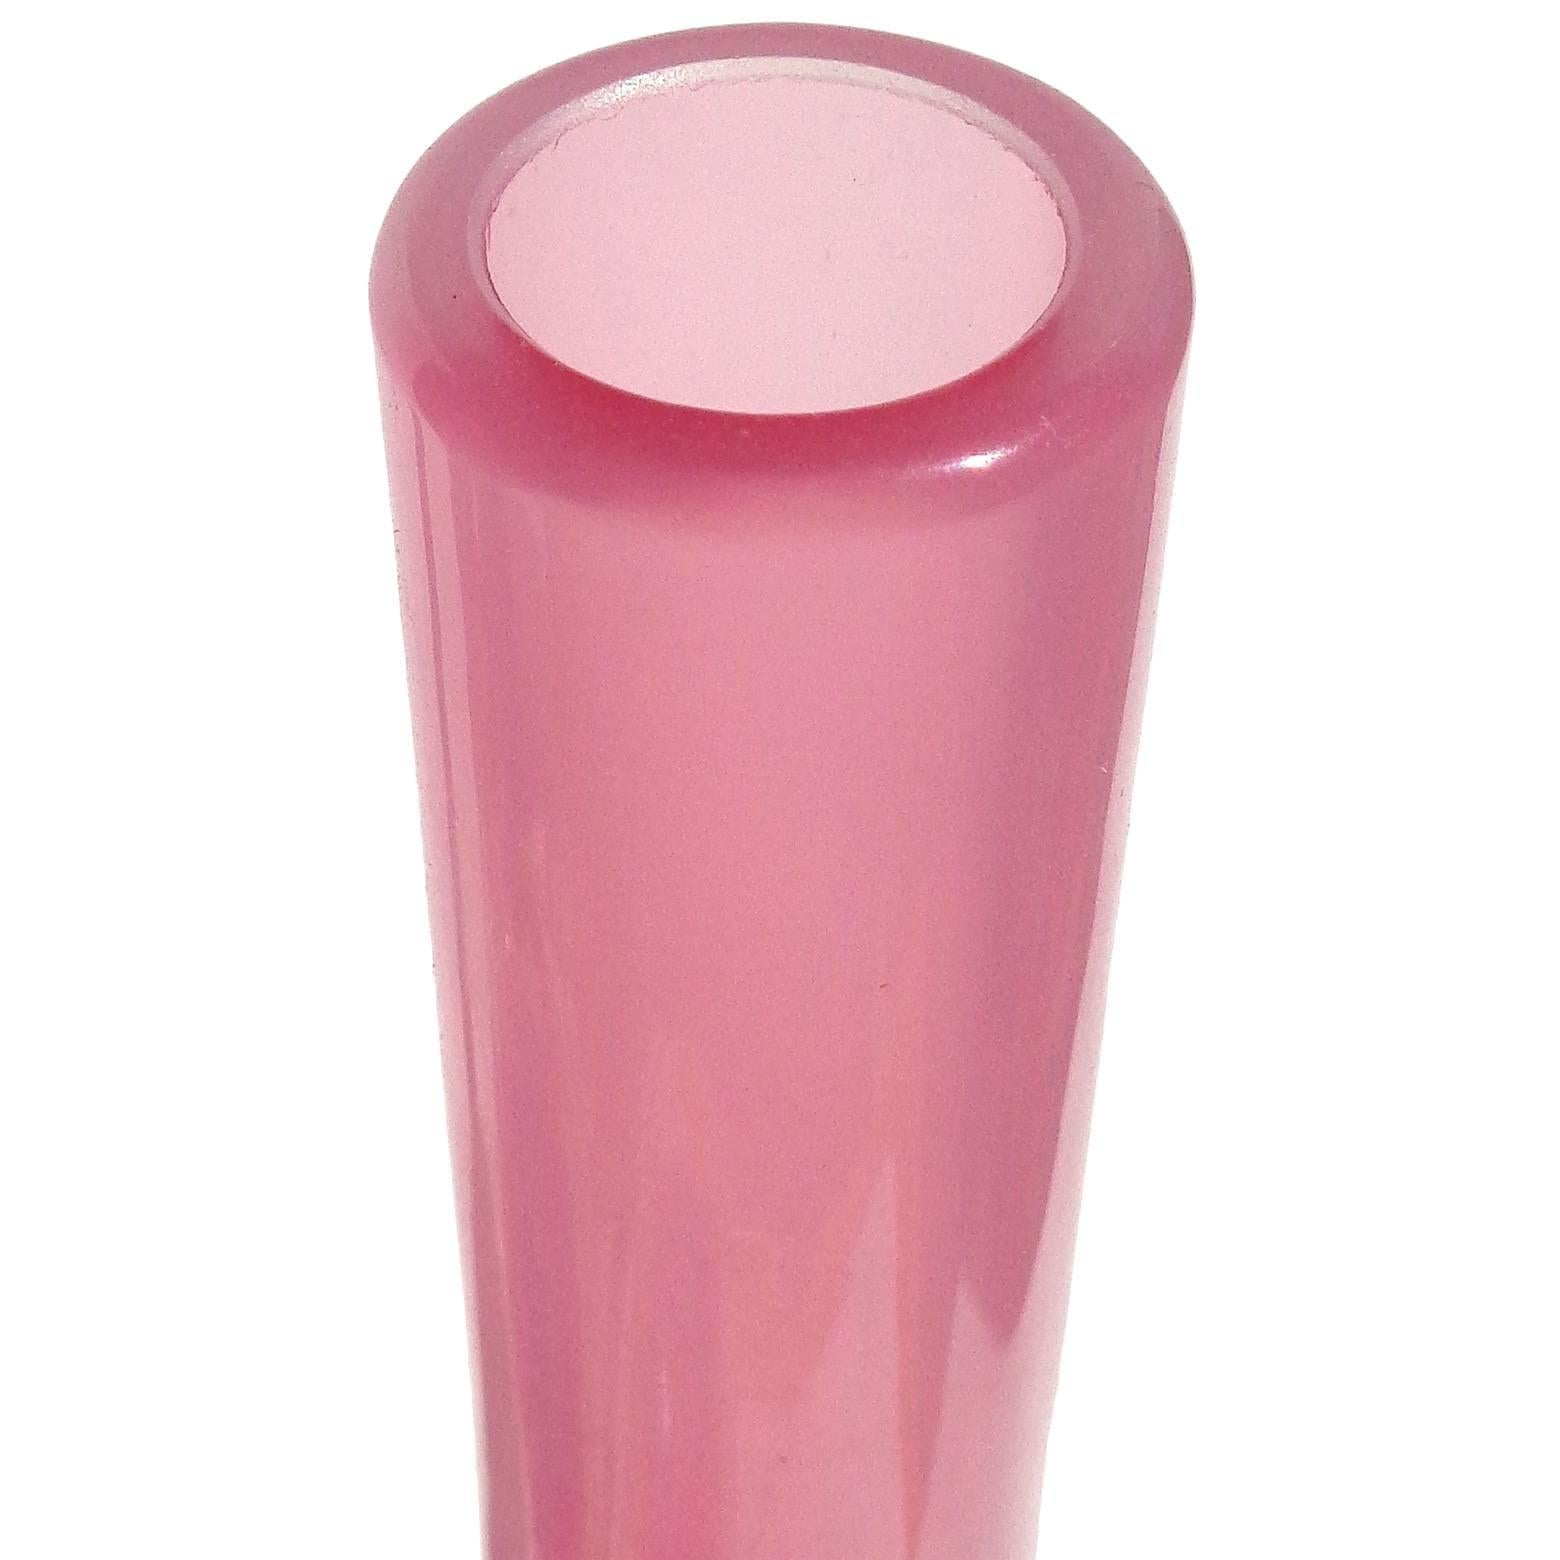 Free shipping worldwide! See details below description.

Beautiful Murano handblown pink opalescent art glass "soliflore" / "specimen" flower vase. Documented to designer Archimede Seguso, in the "Alabastro" technique